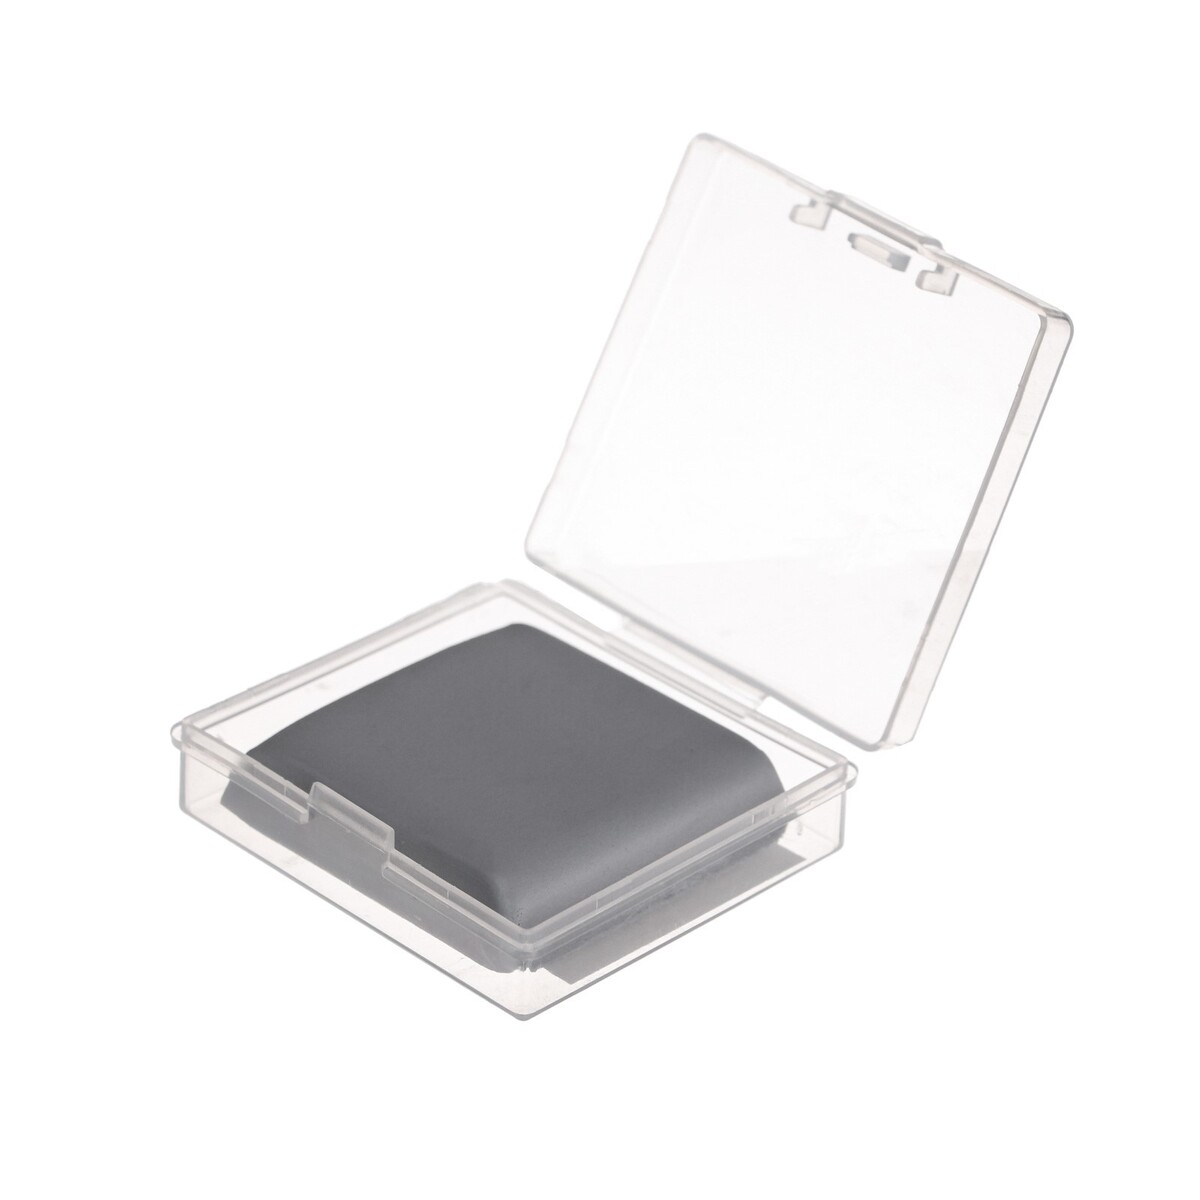 Ластик клячка прямоугольный серый, размер 37 х 35 х 0,9 мм, в коробочке ластик week